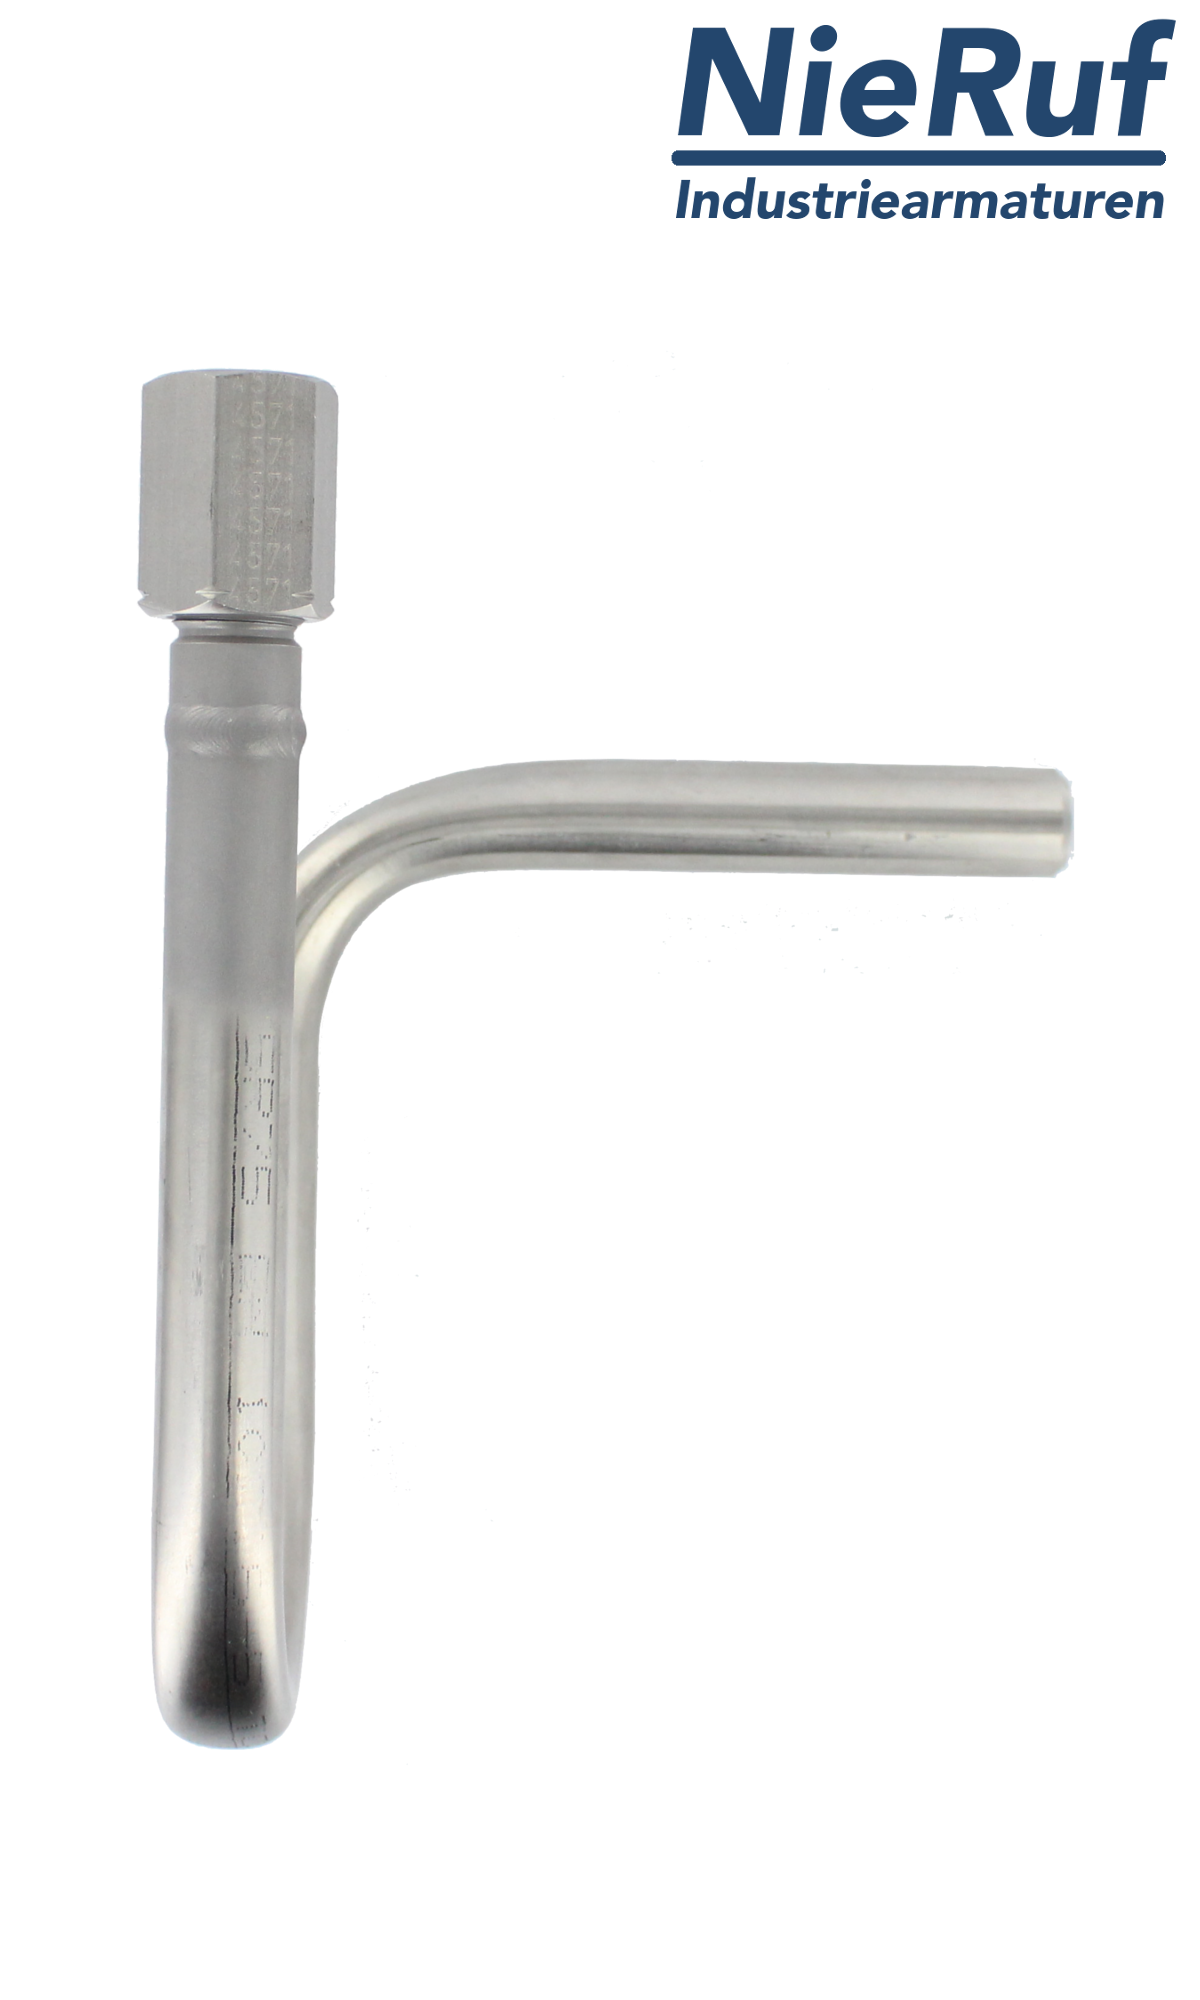 siphon 1/2" inch acc. toDIN 16282 - form B steel St35.8 U-shape flat